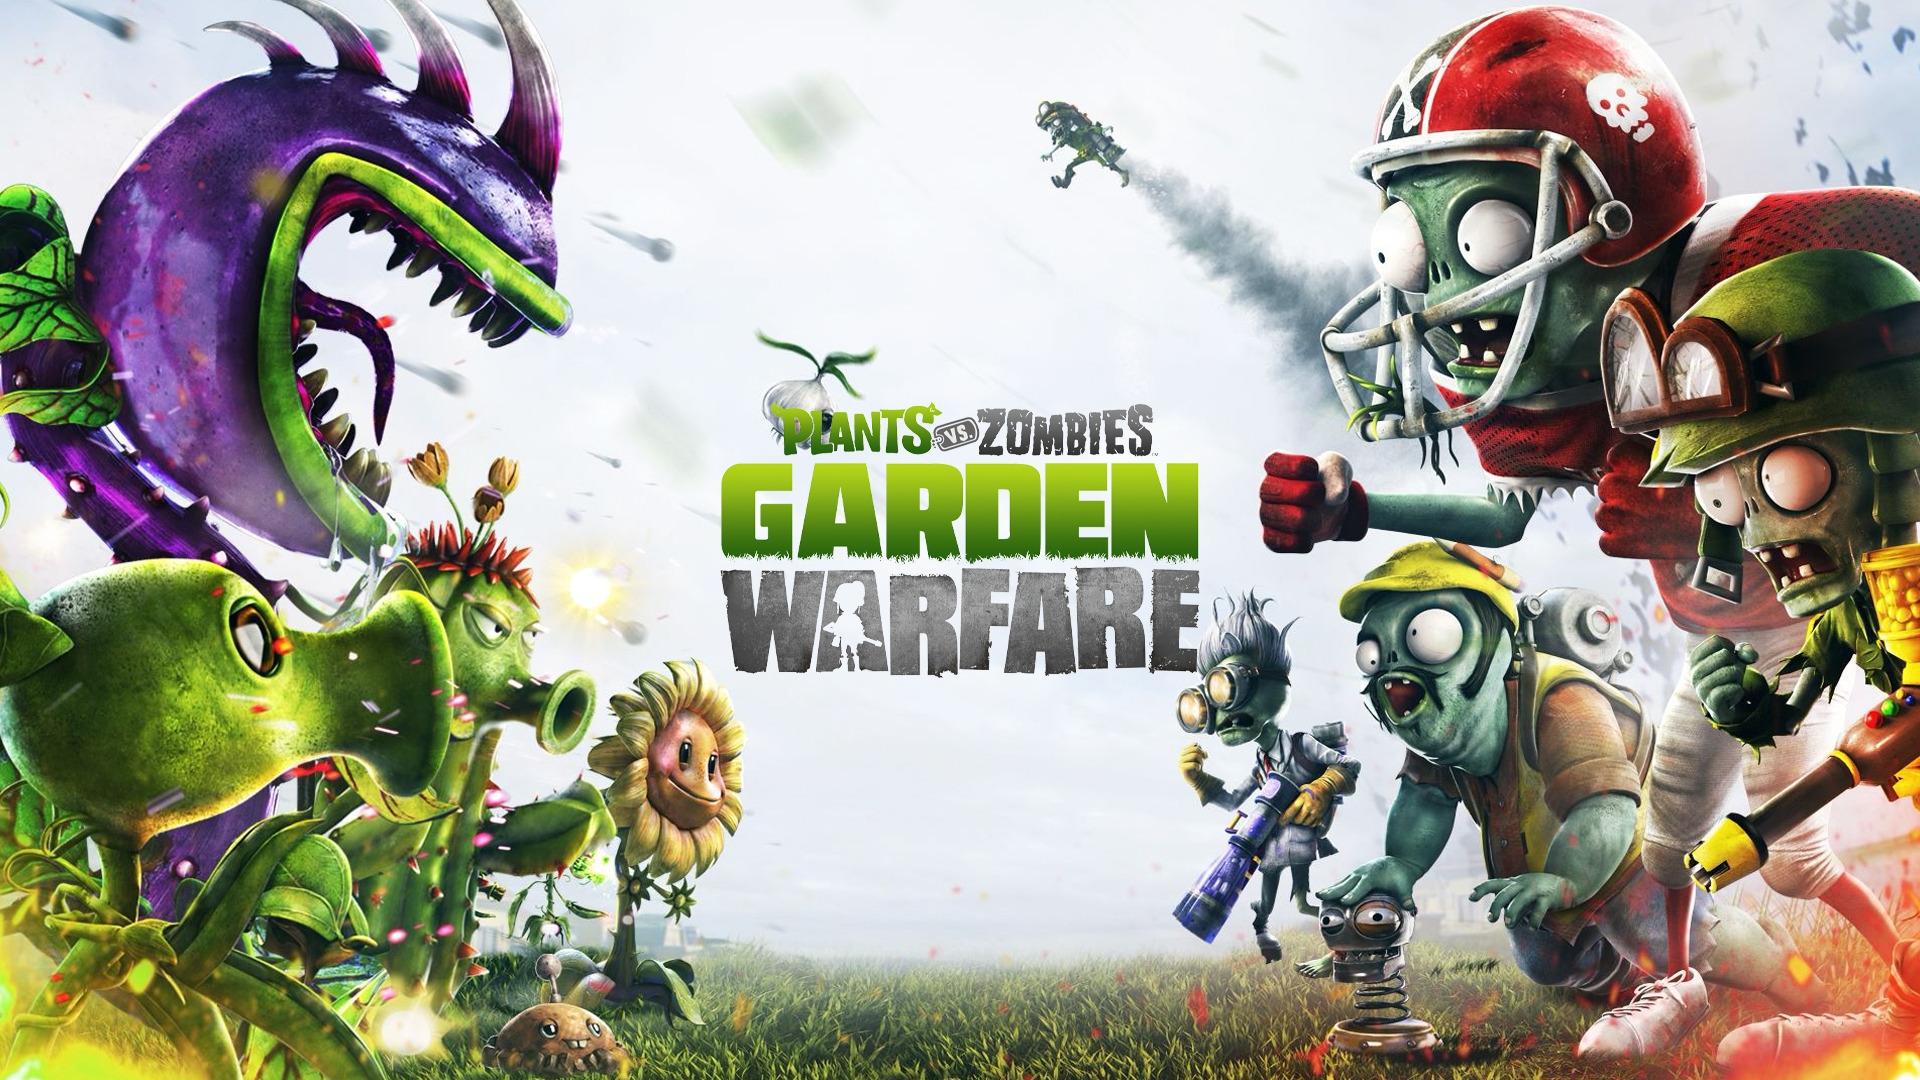 Plants vs zombies garden warfare ps4 free to play